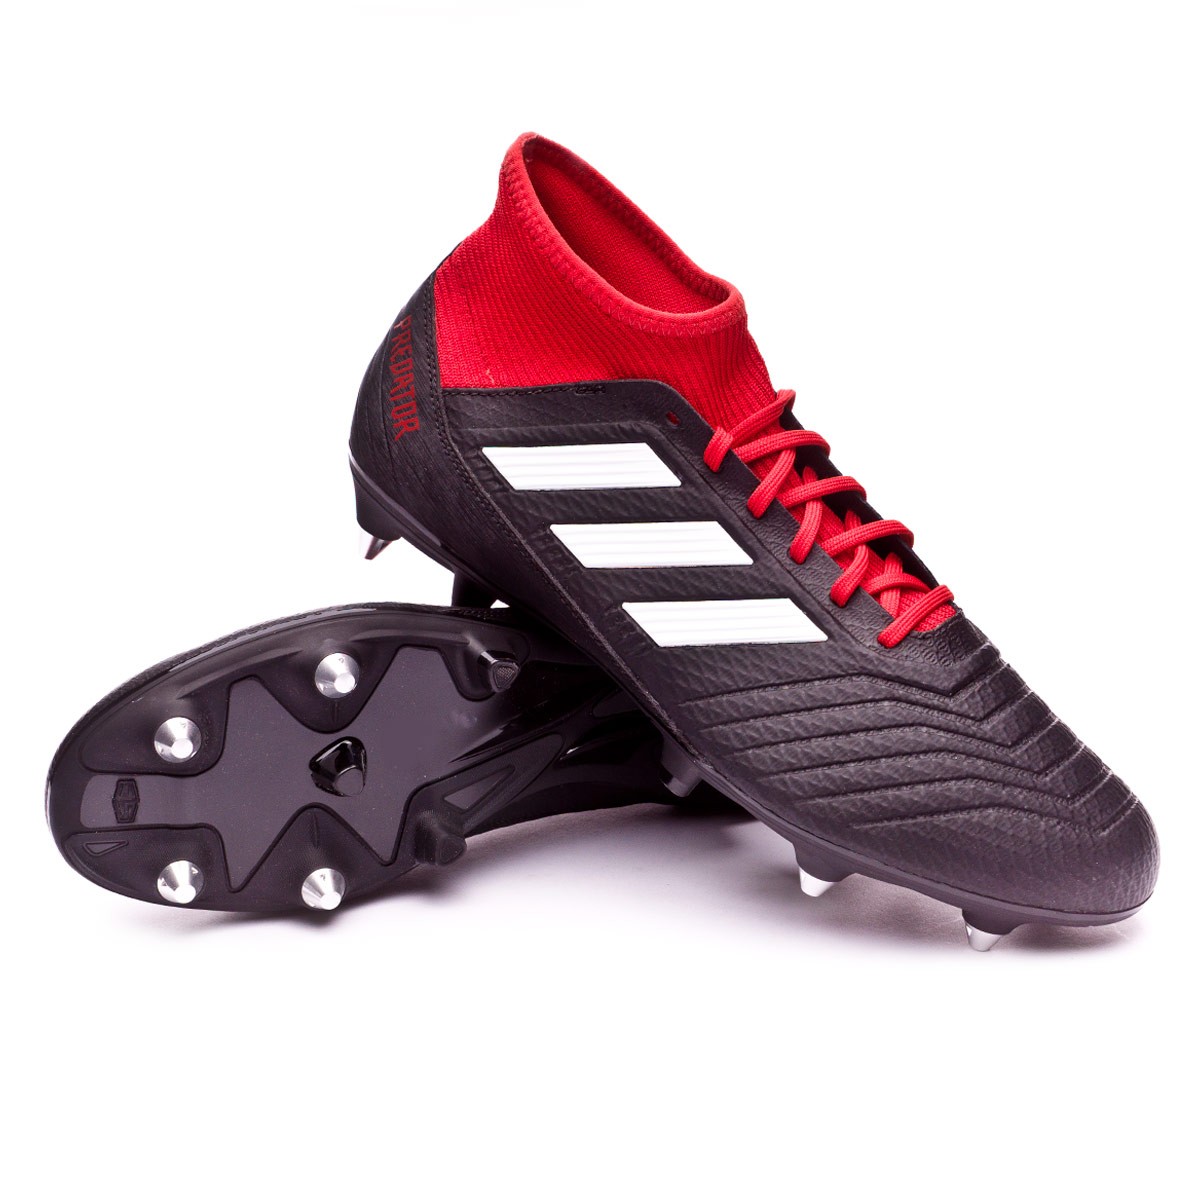 Football Boots adidas Predator 18.3 SG 